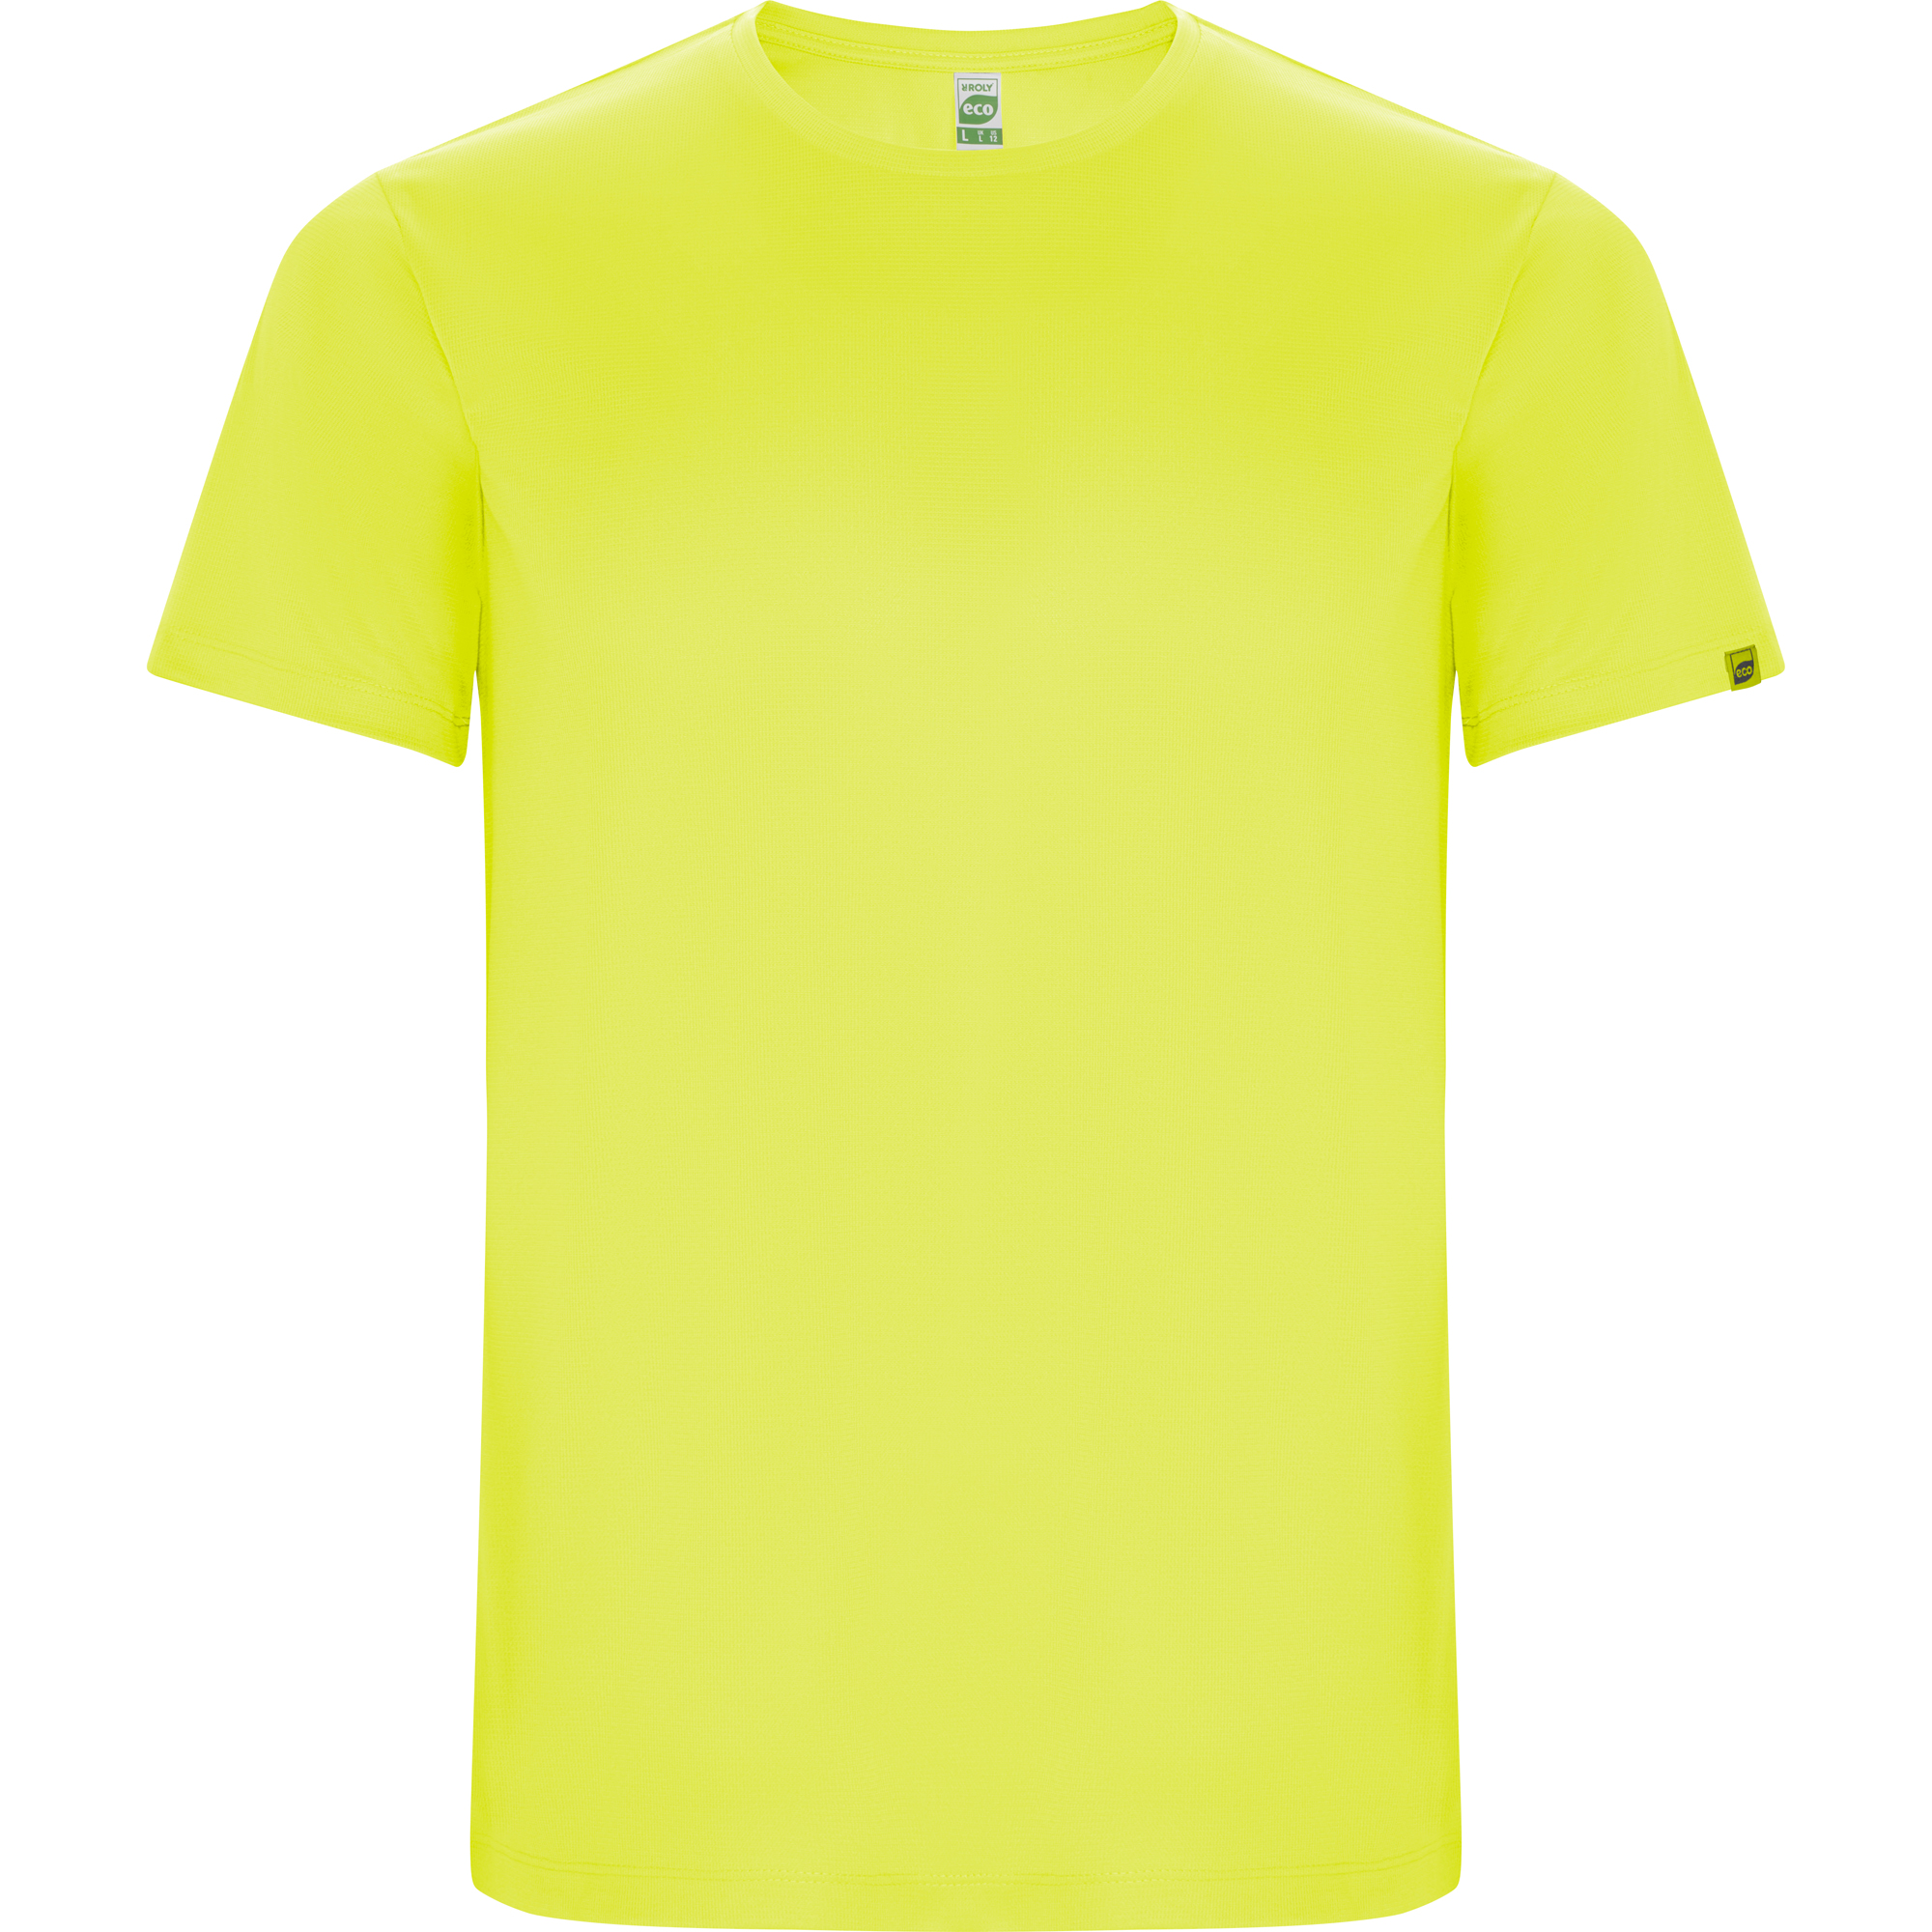 r0427-roly-imola-t-shirt-tecnica-giallo-fluo.jpg